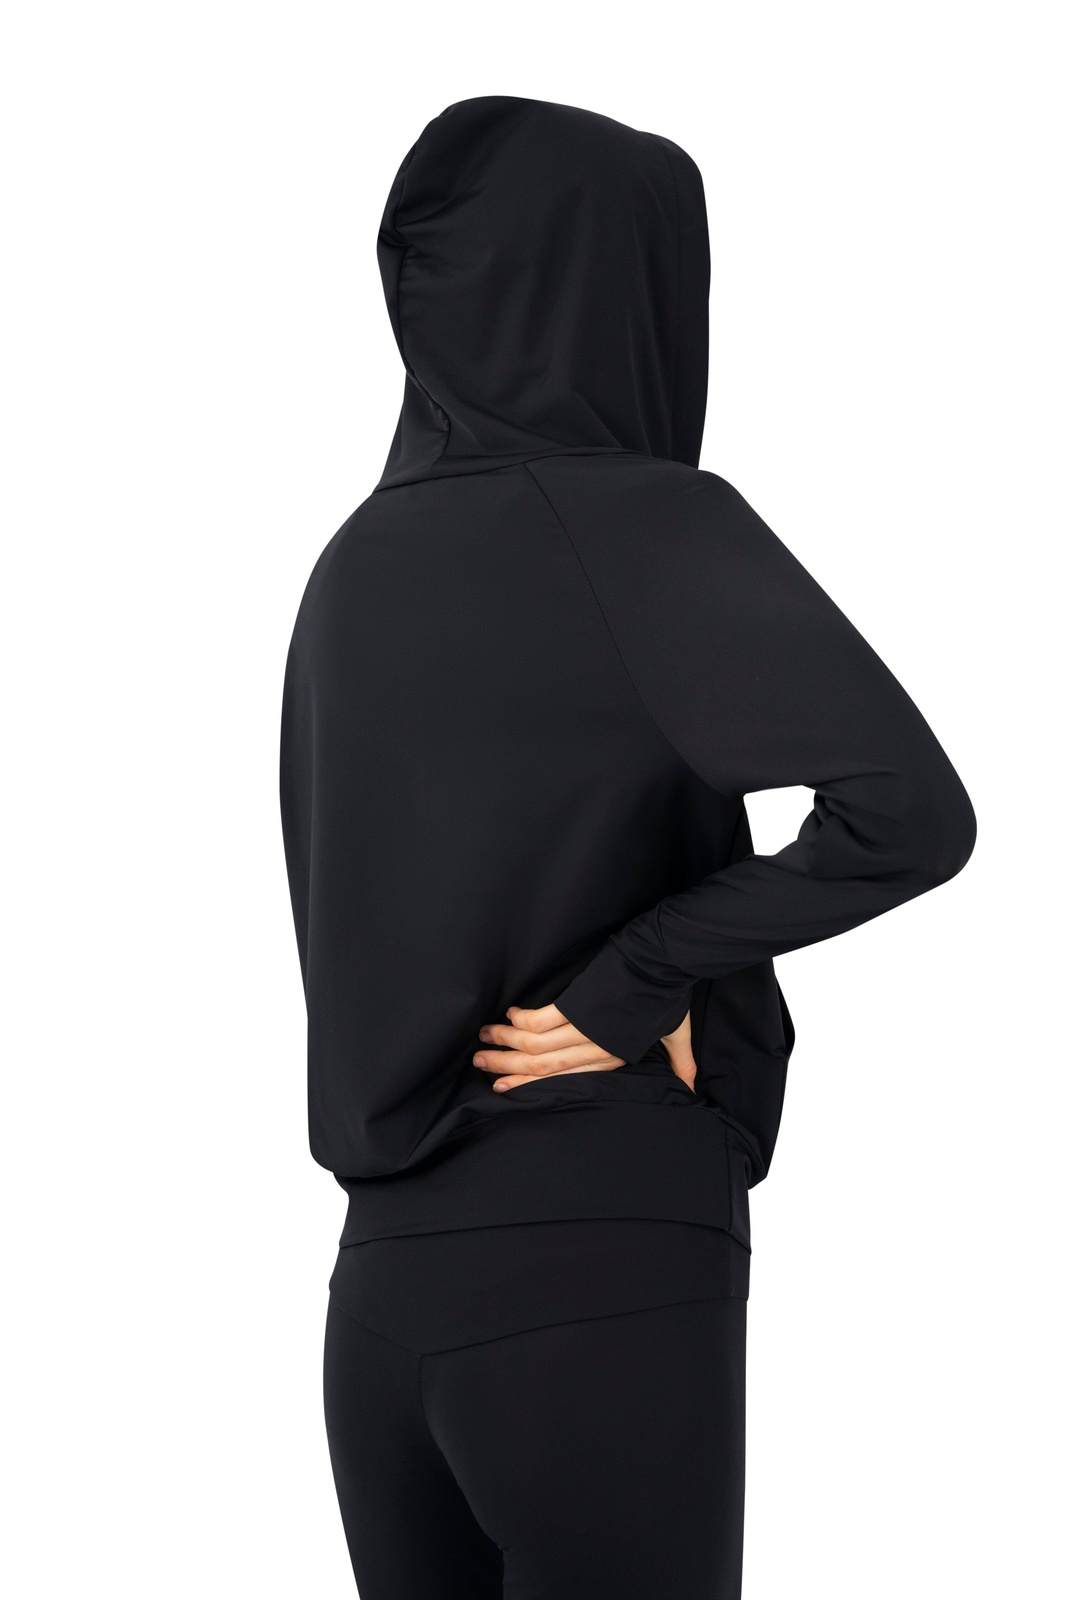 Womens Designer Zip Up Lightweight Hoodie by Ekoluxe Sustainable Clothing Brand